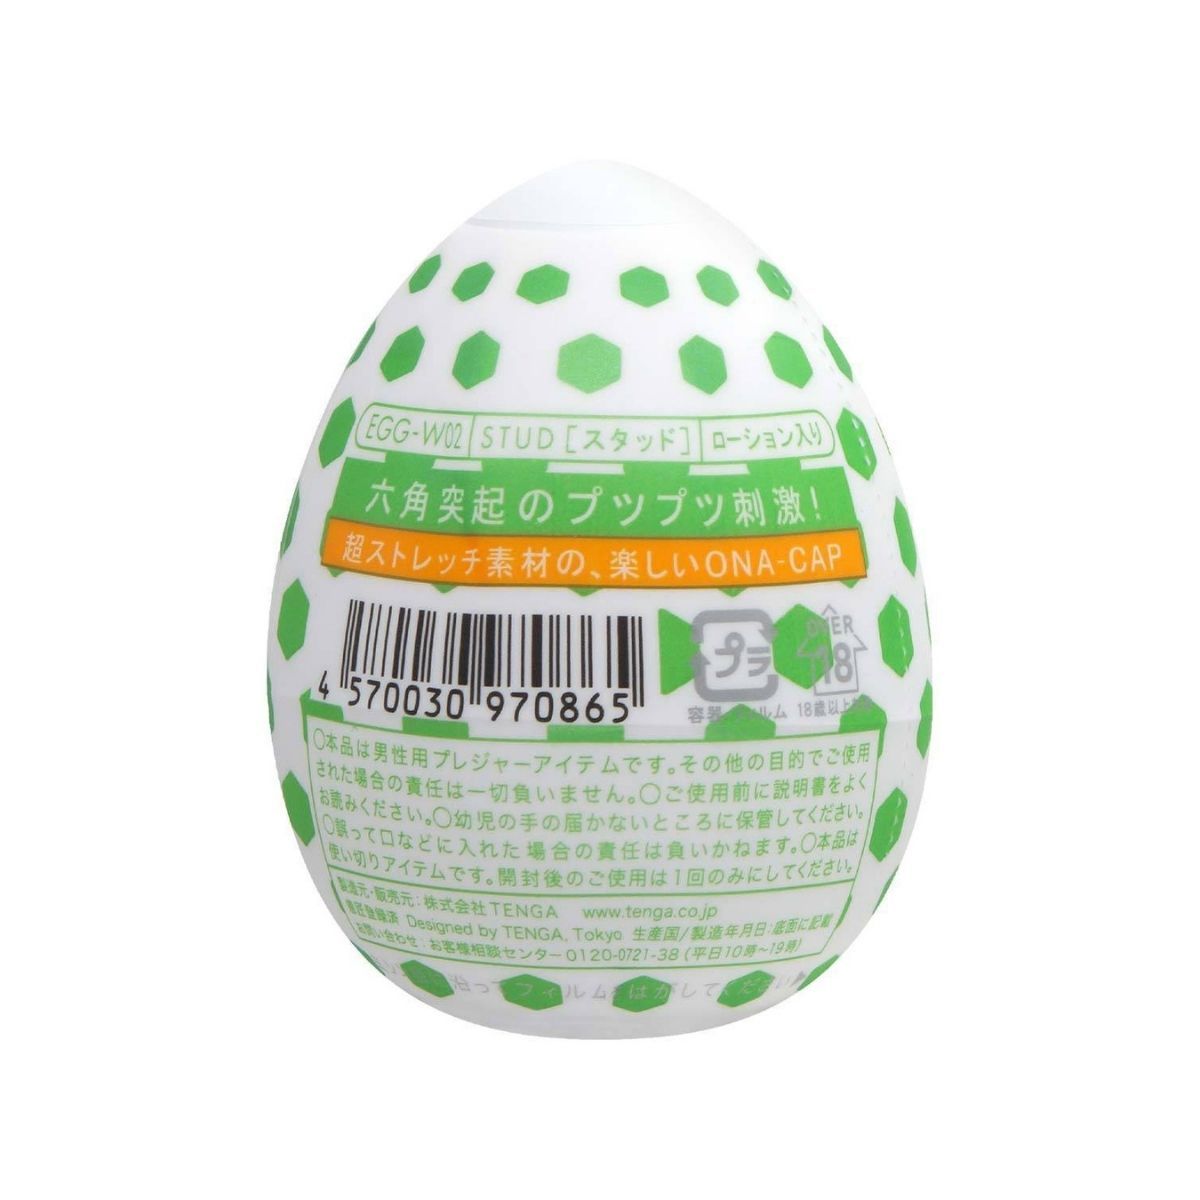 TENGA Egg Stud 六角紋飛機蛋 飛機蛋 購買